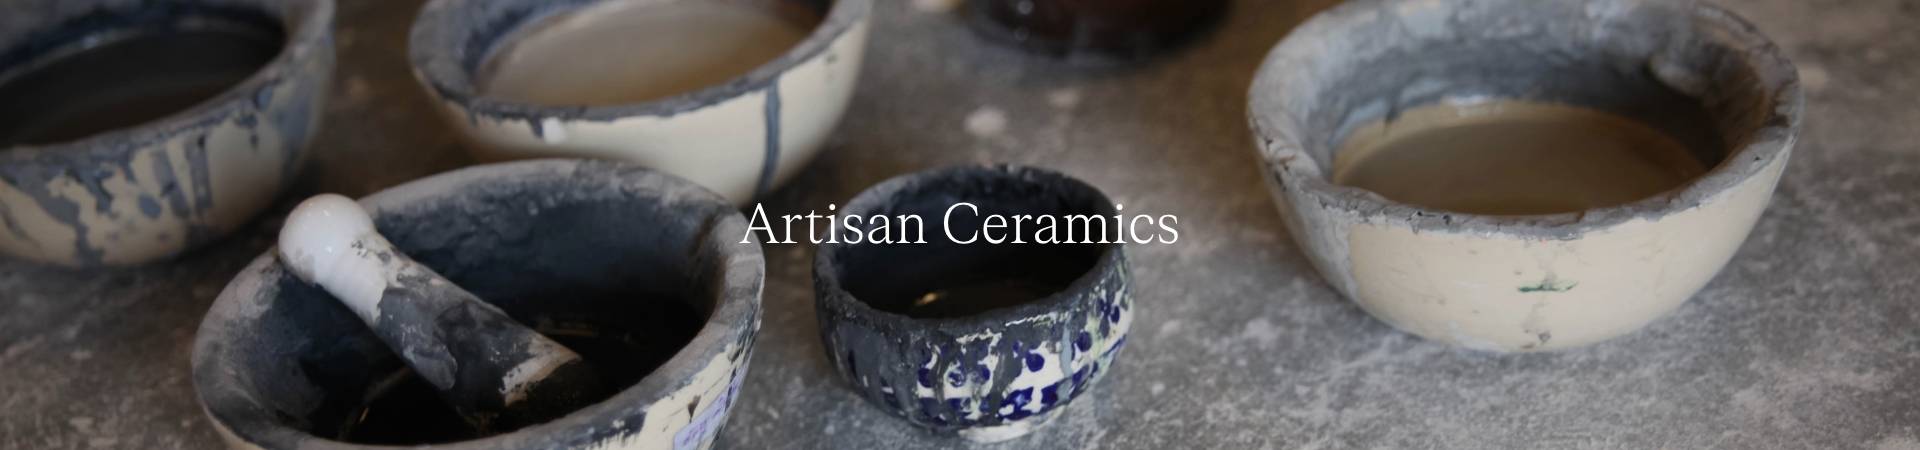 Artisan Ceramics.jpg